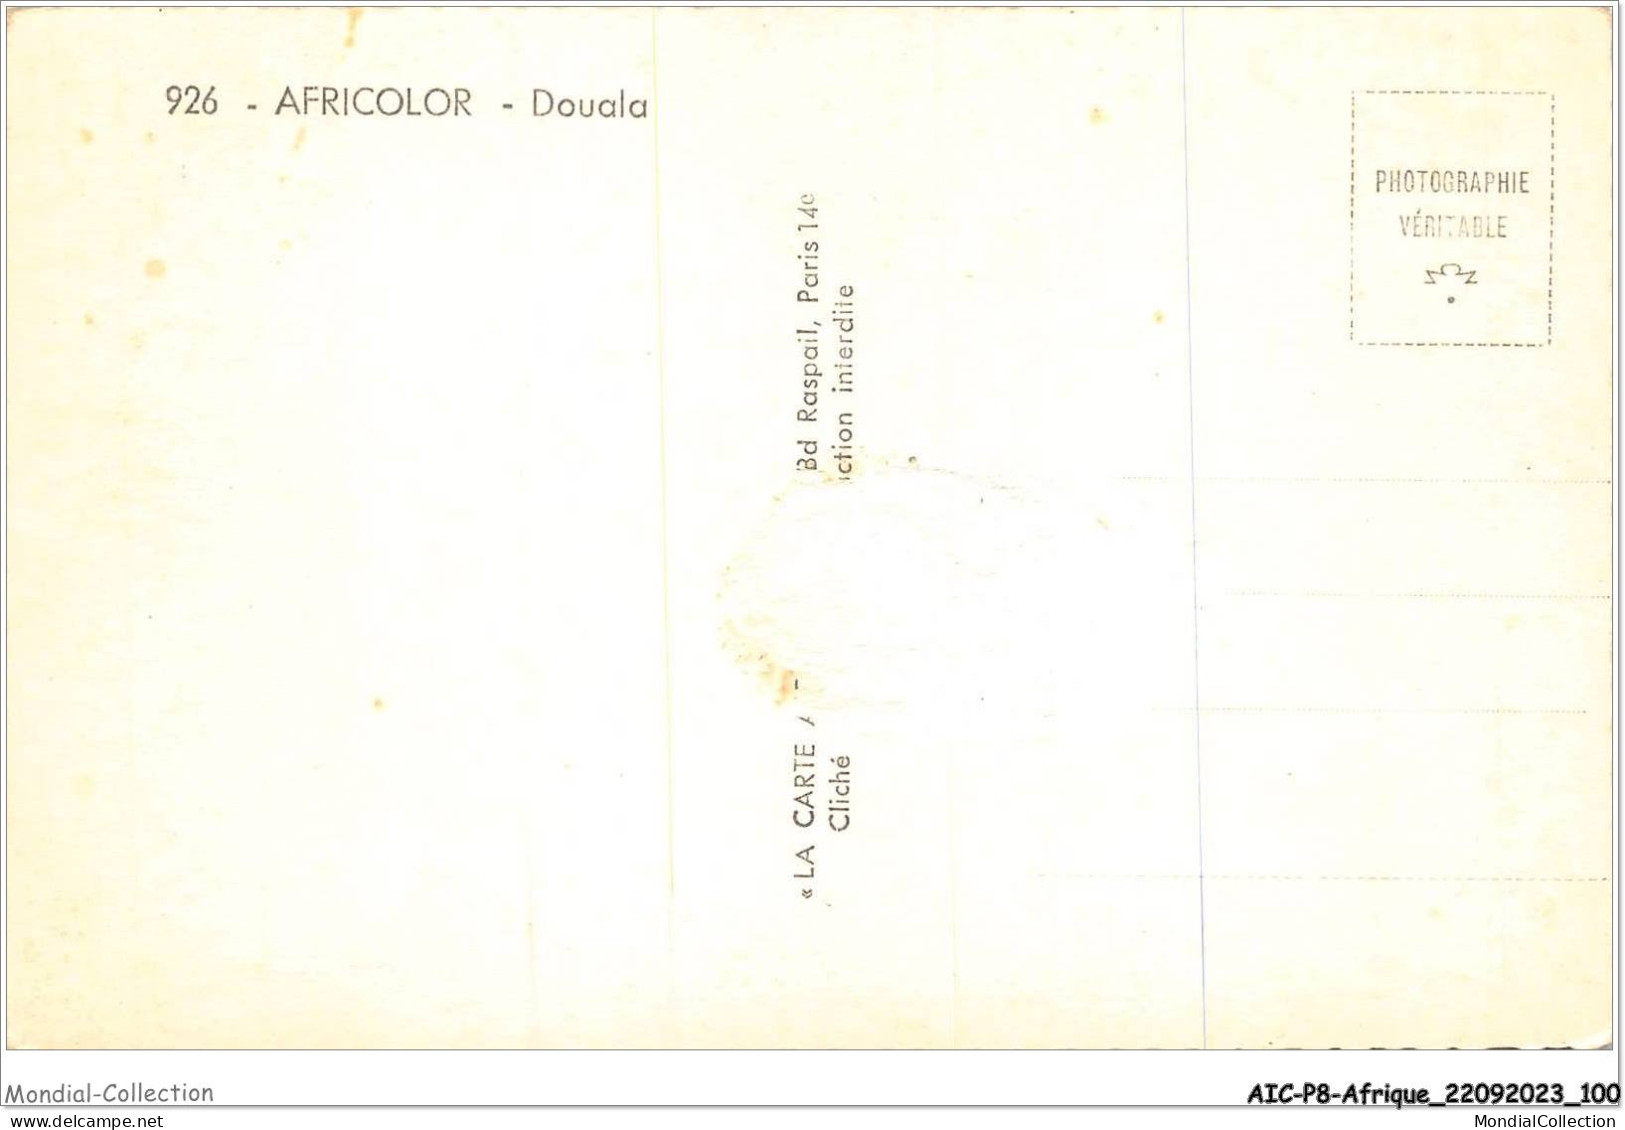 AICP8-AFRIQUE-0904 - AFRICOLOR - DOUALA - Cameroon